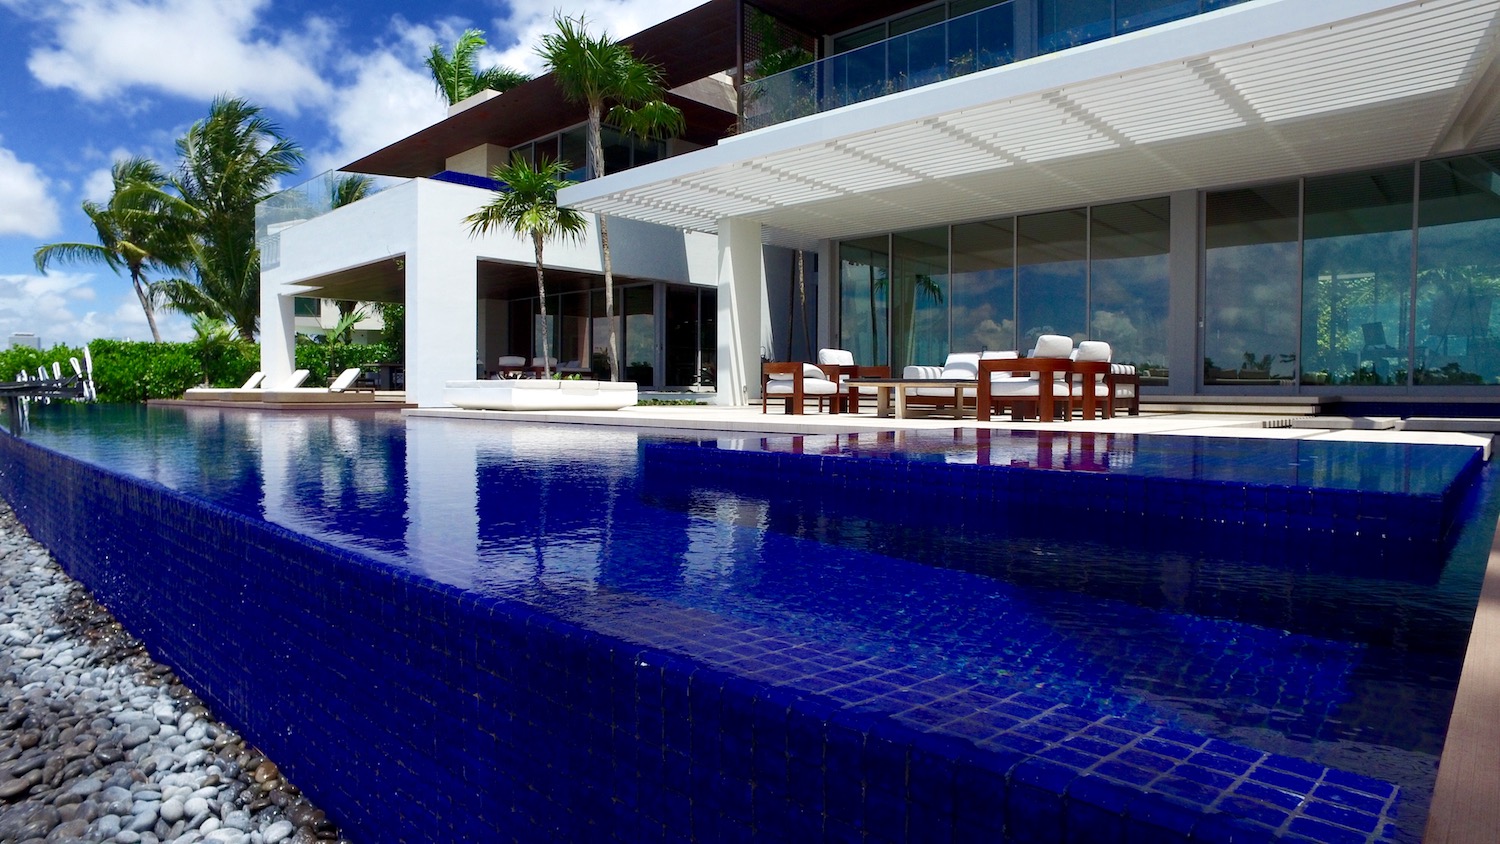 Luxury pool construction in miami